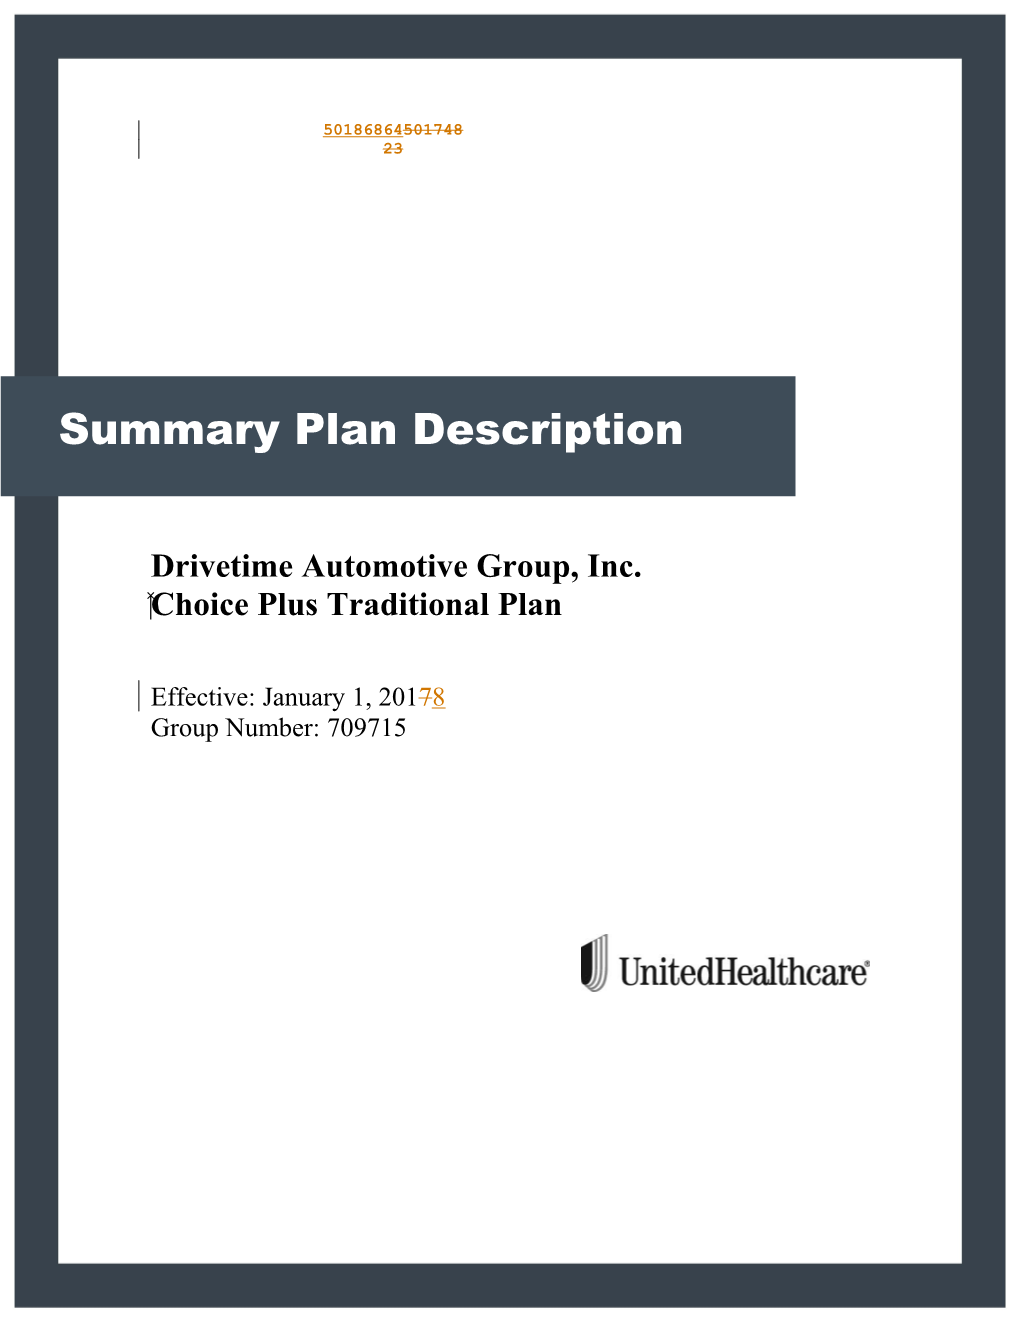 Drivetime Automotive Group, Inc. Medical Choice Plus Traditional Plan